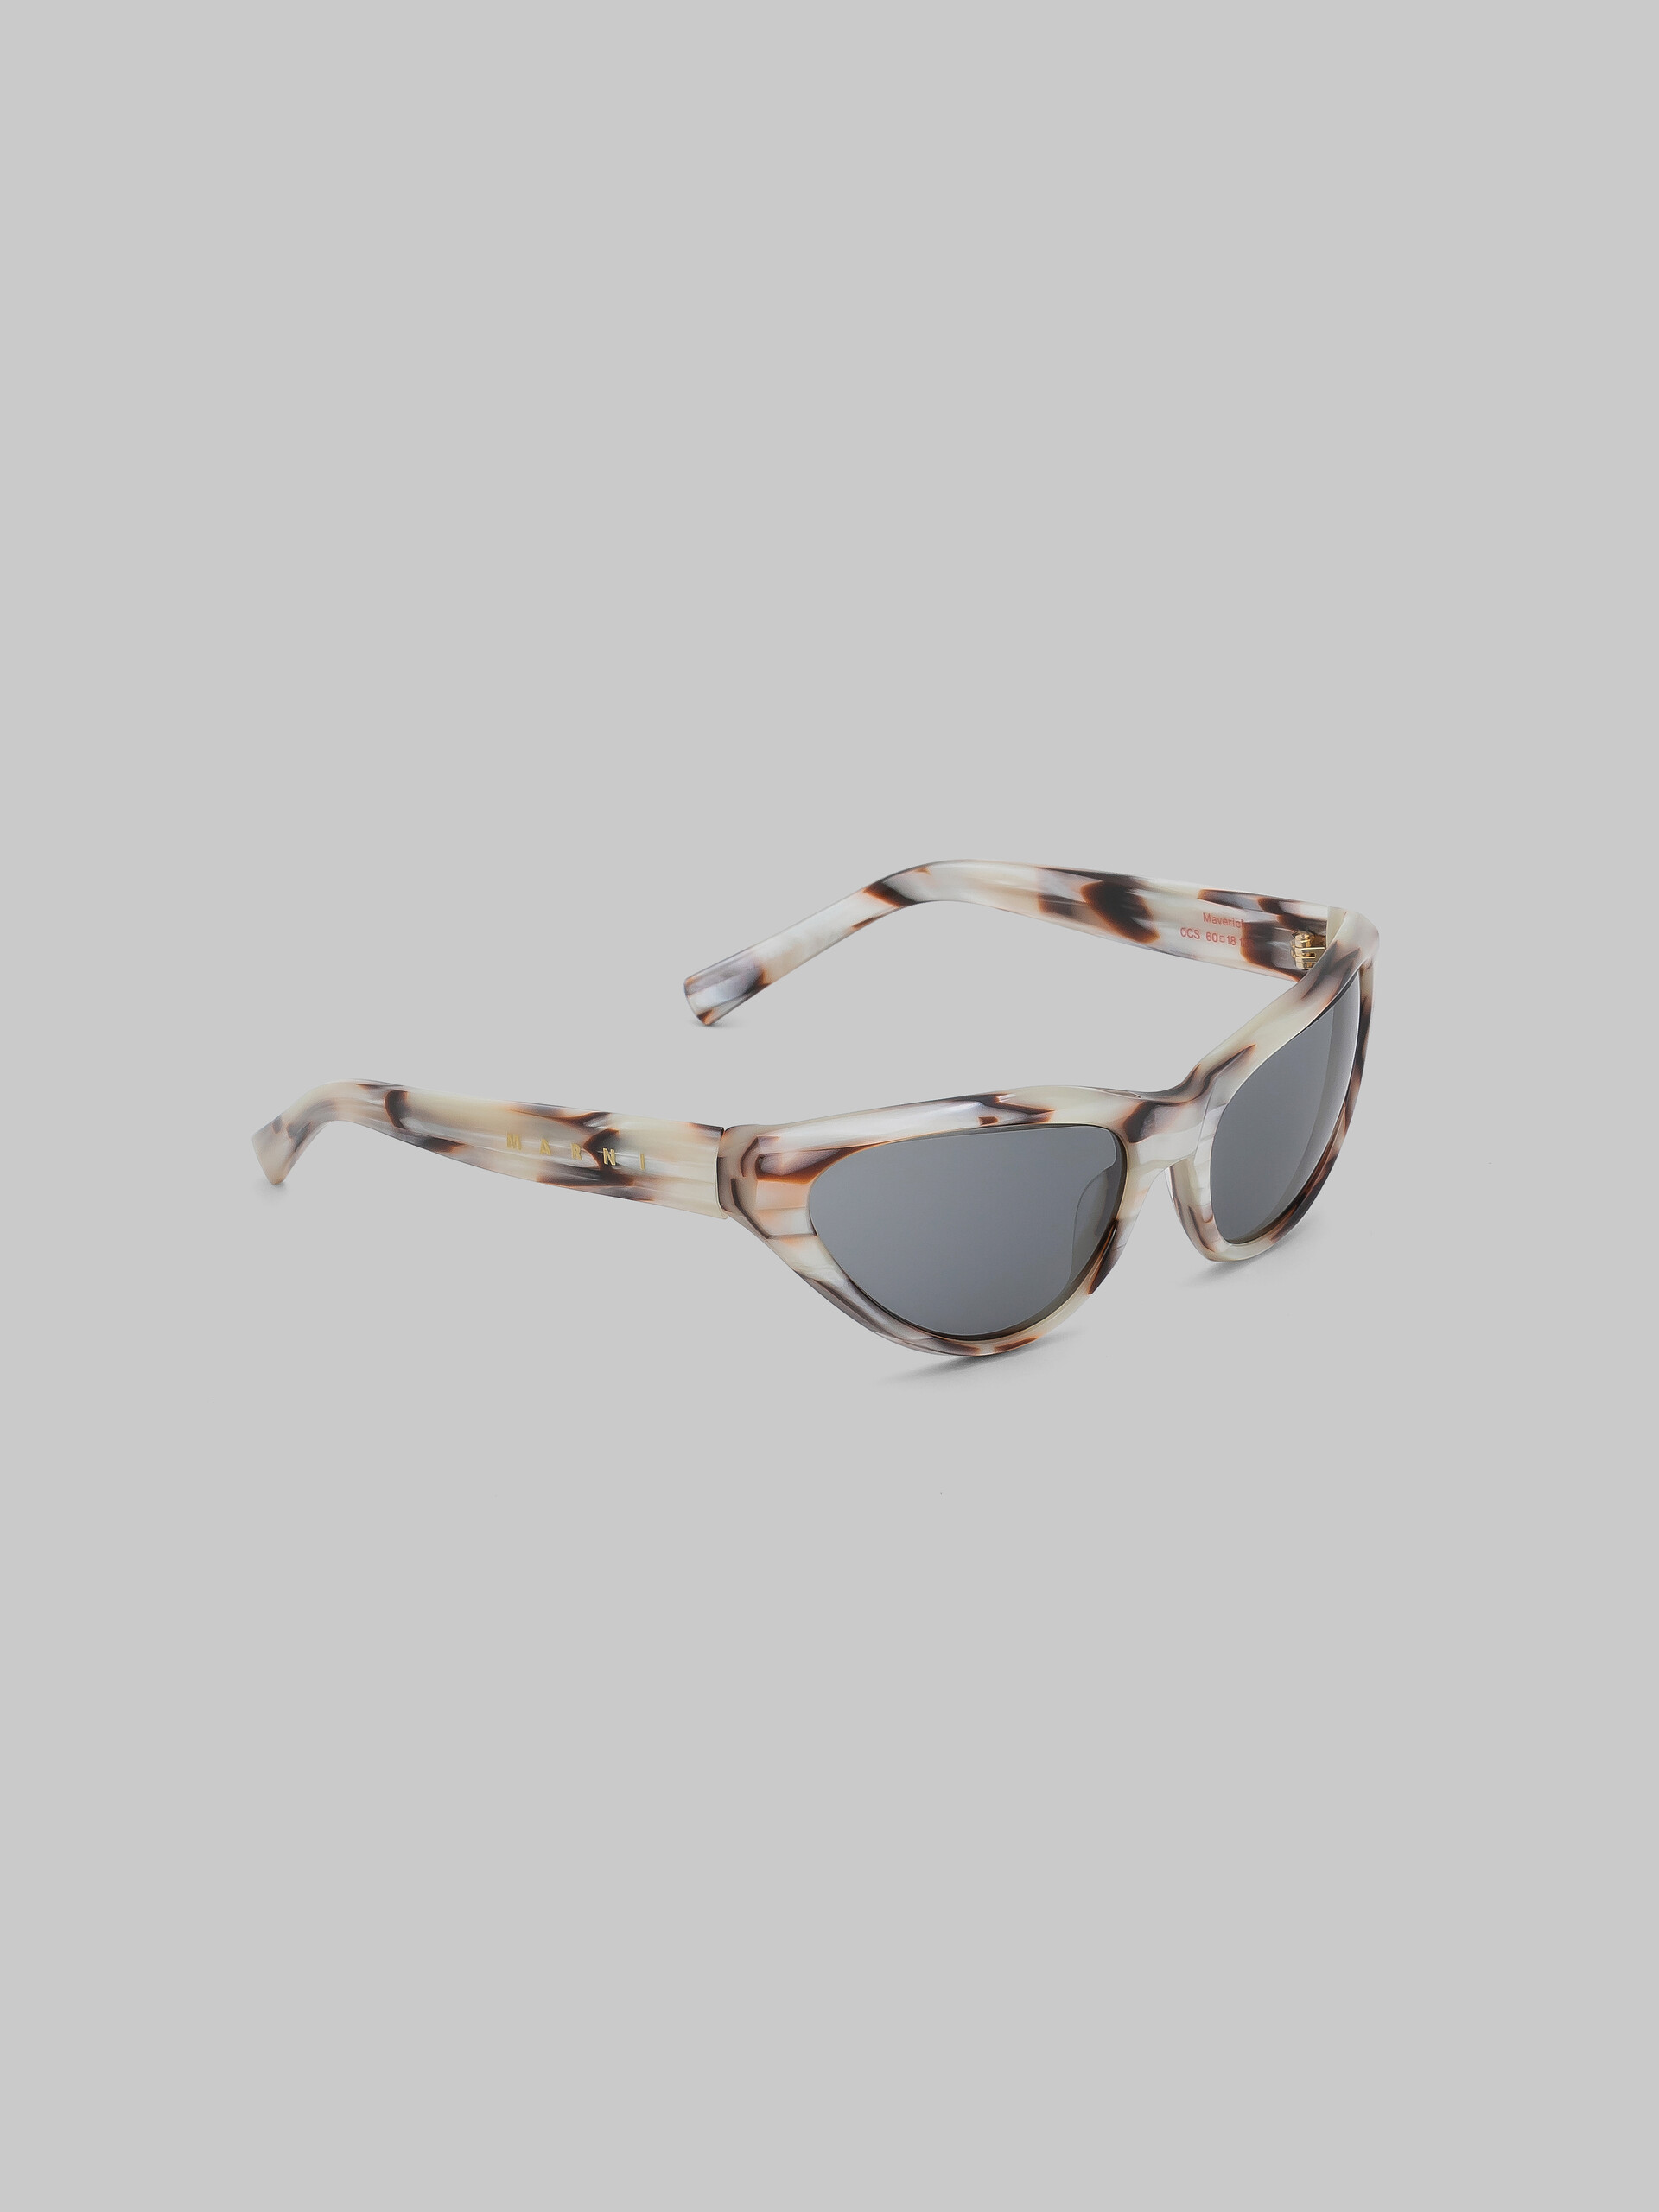 Starshell Mavericks sunglasses - Optical - Image 3